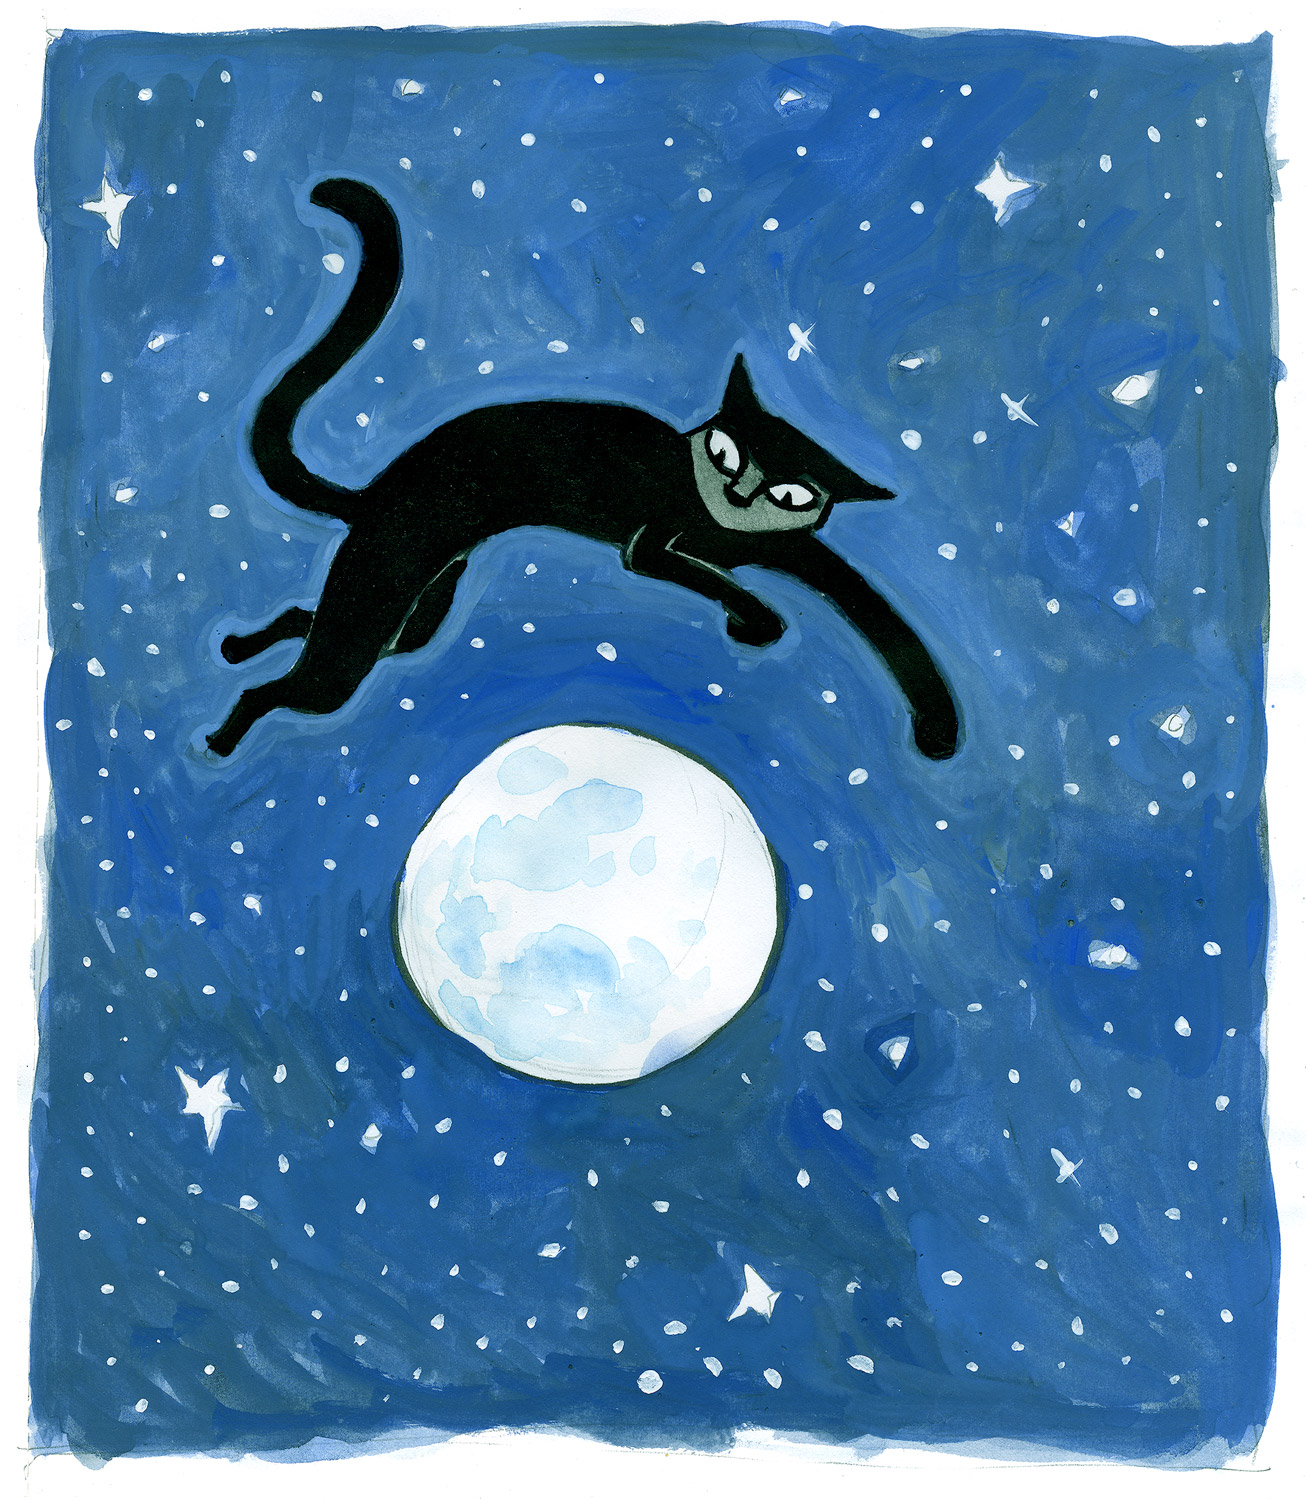 2018-06-28-cat-moon-sketch-sm